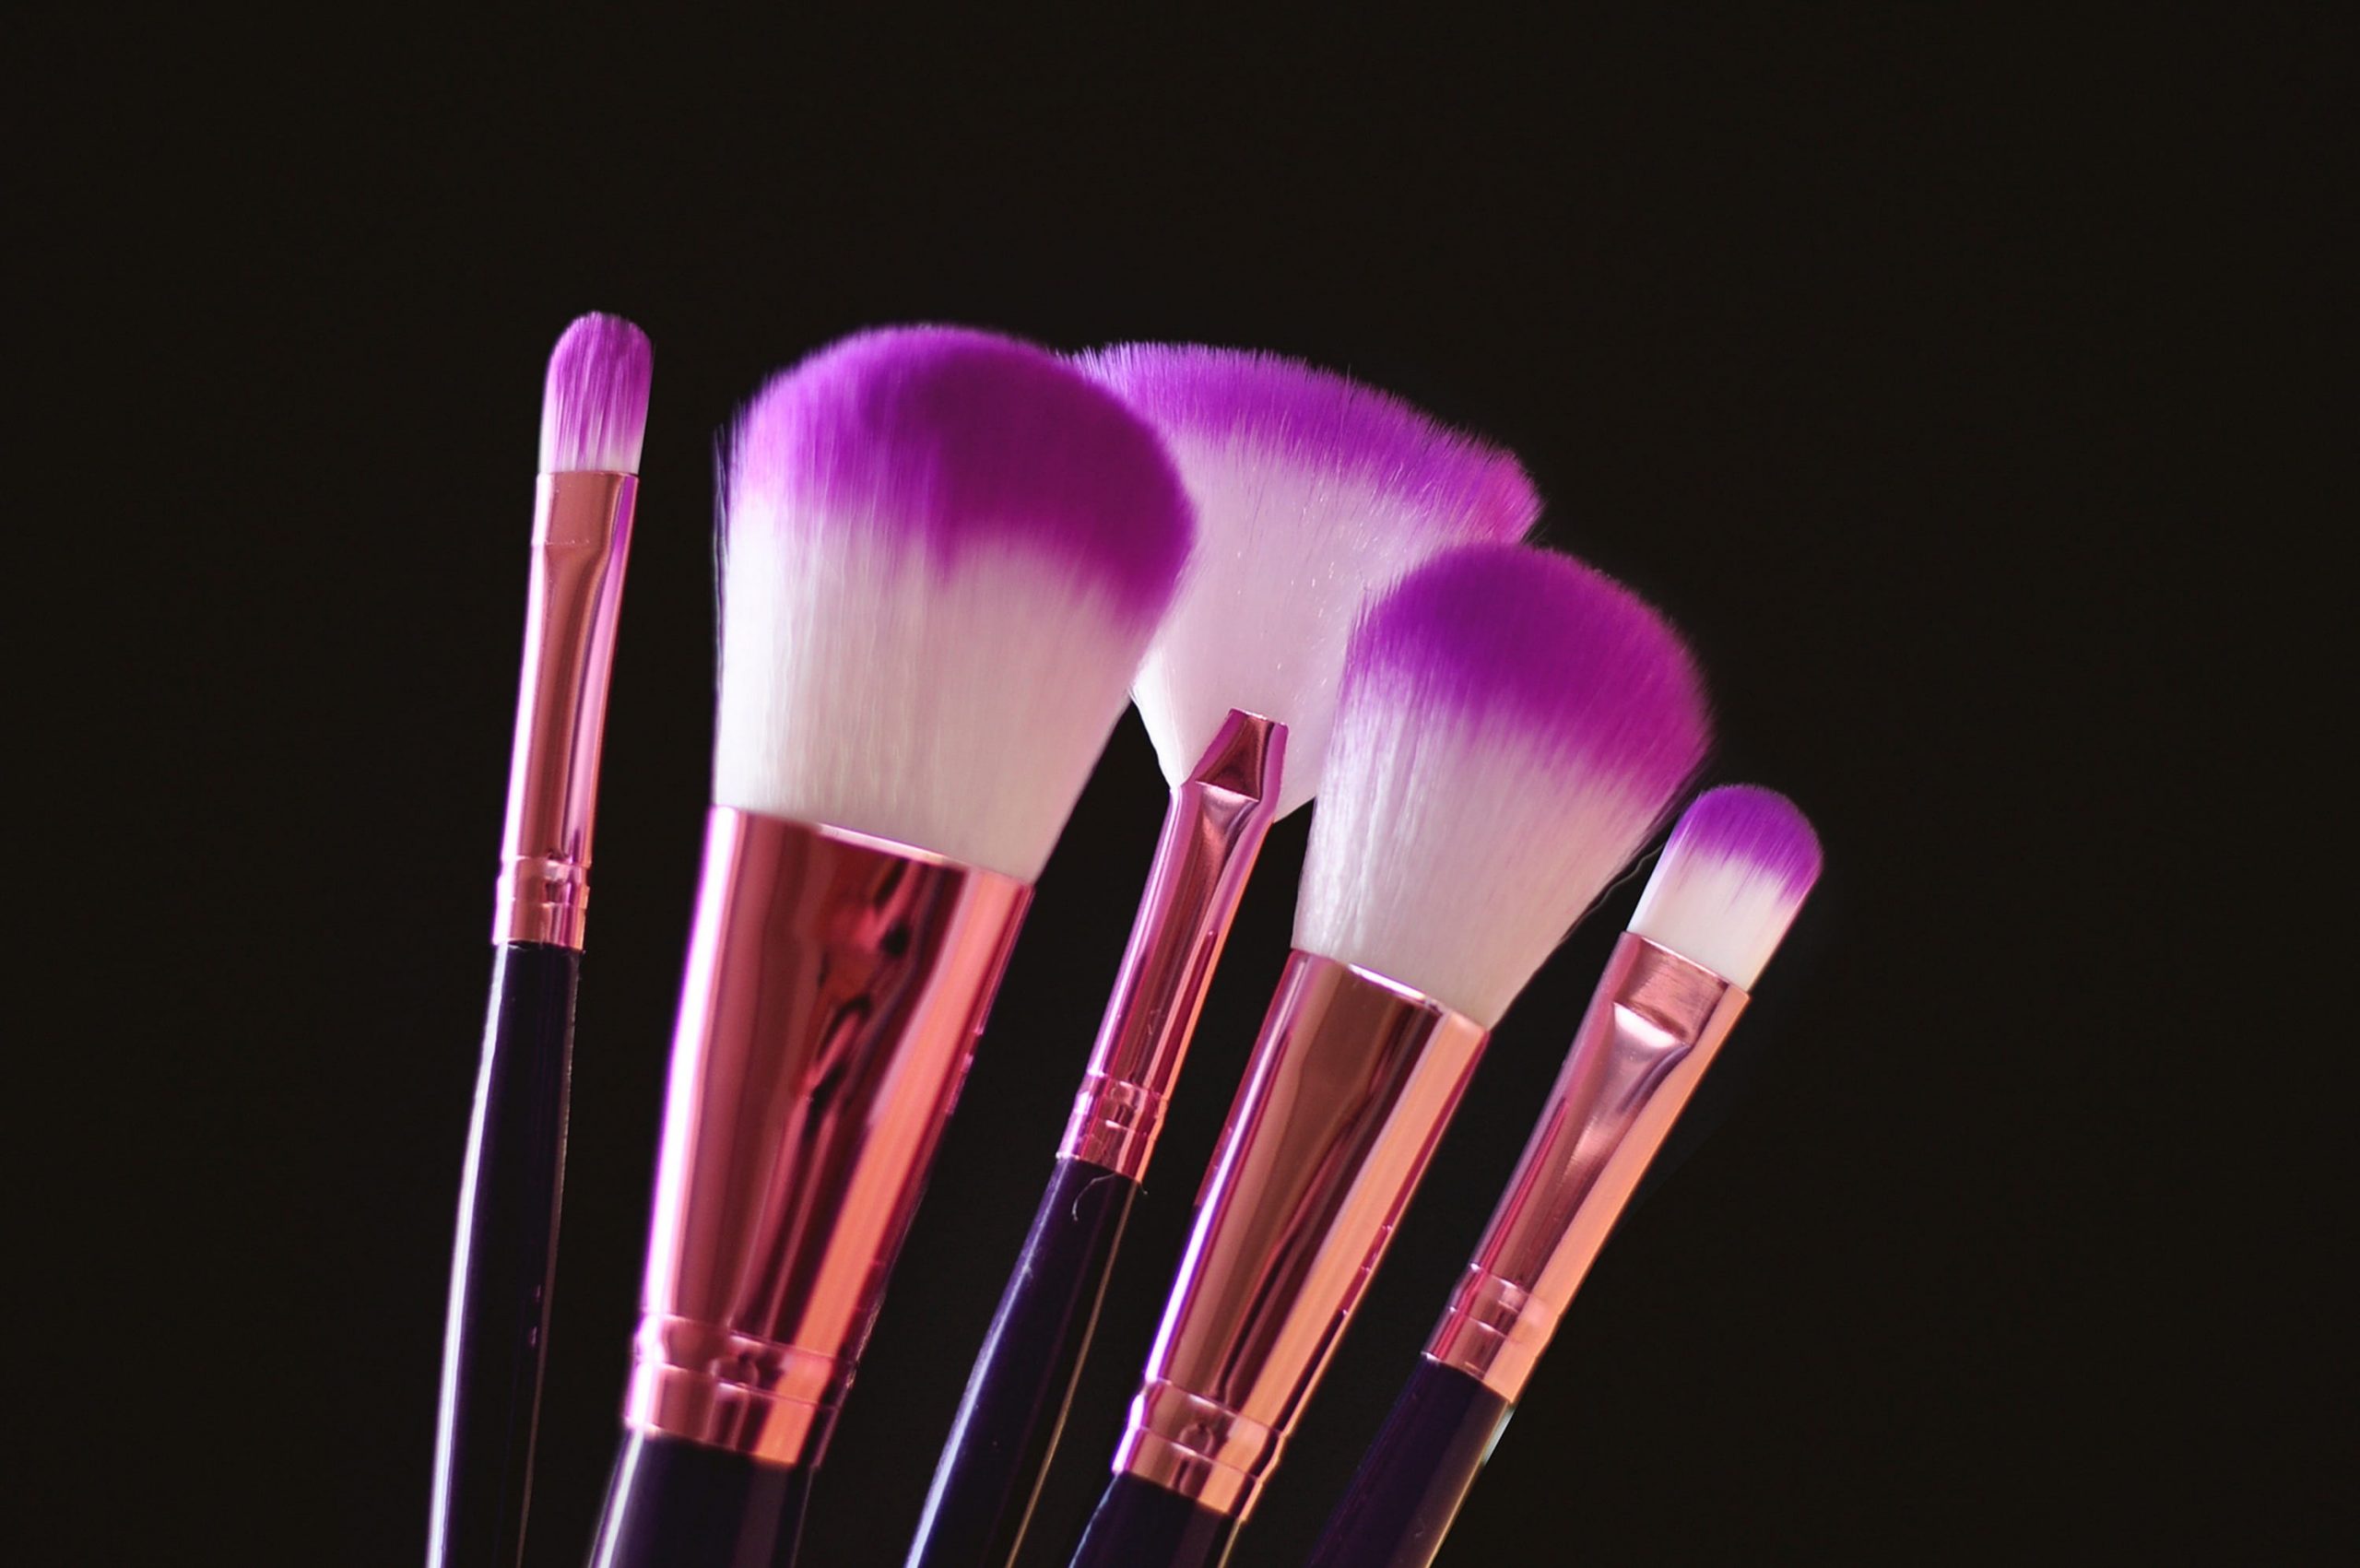 Wallpaper makeup brushes, bristles, purple, white, black, rose gold, studio shot